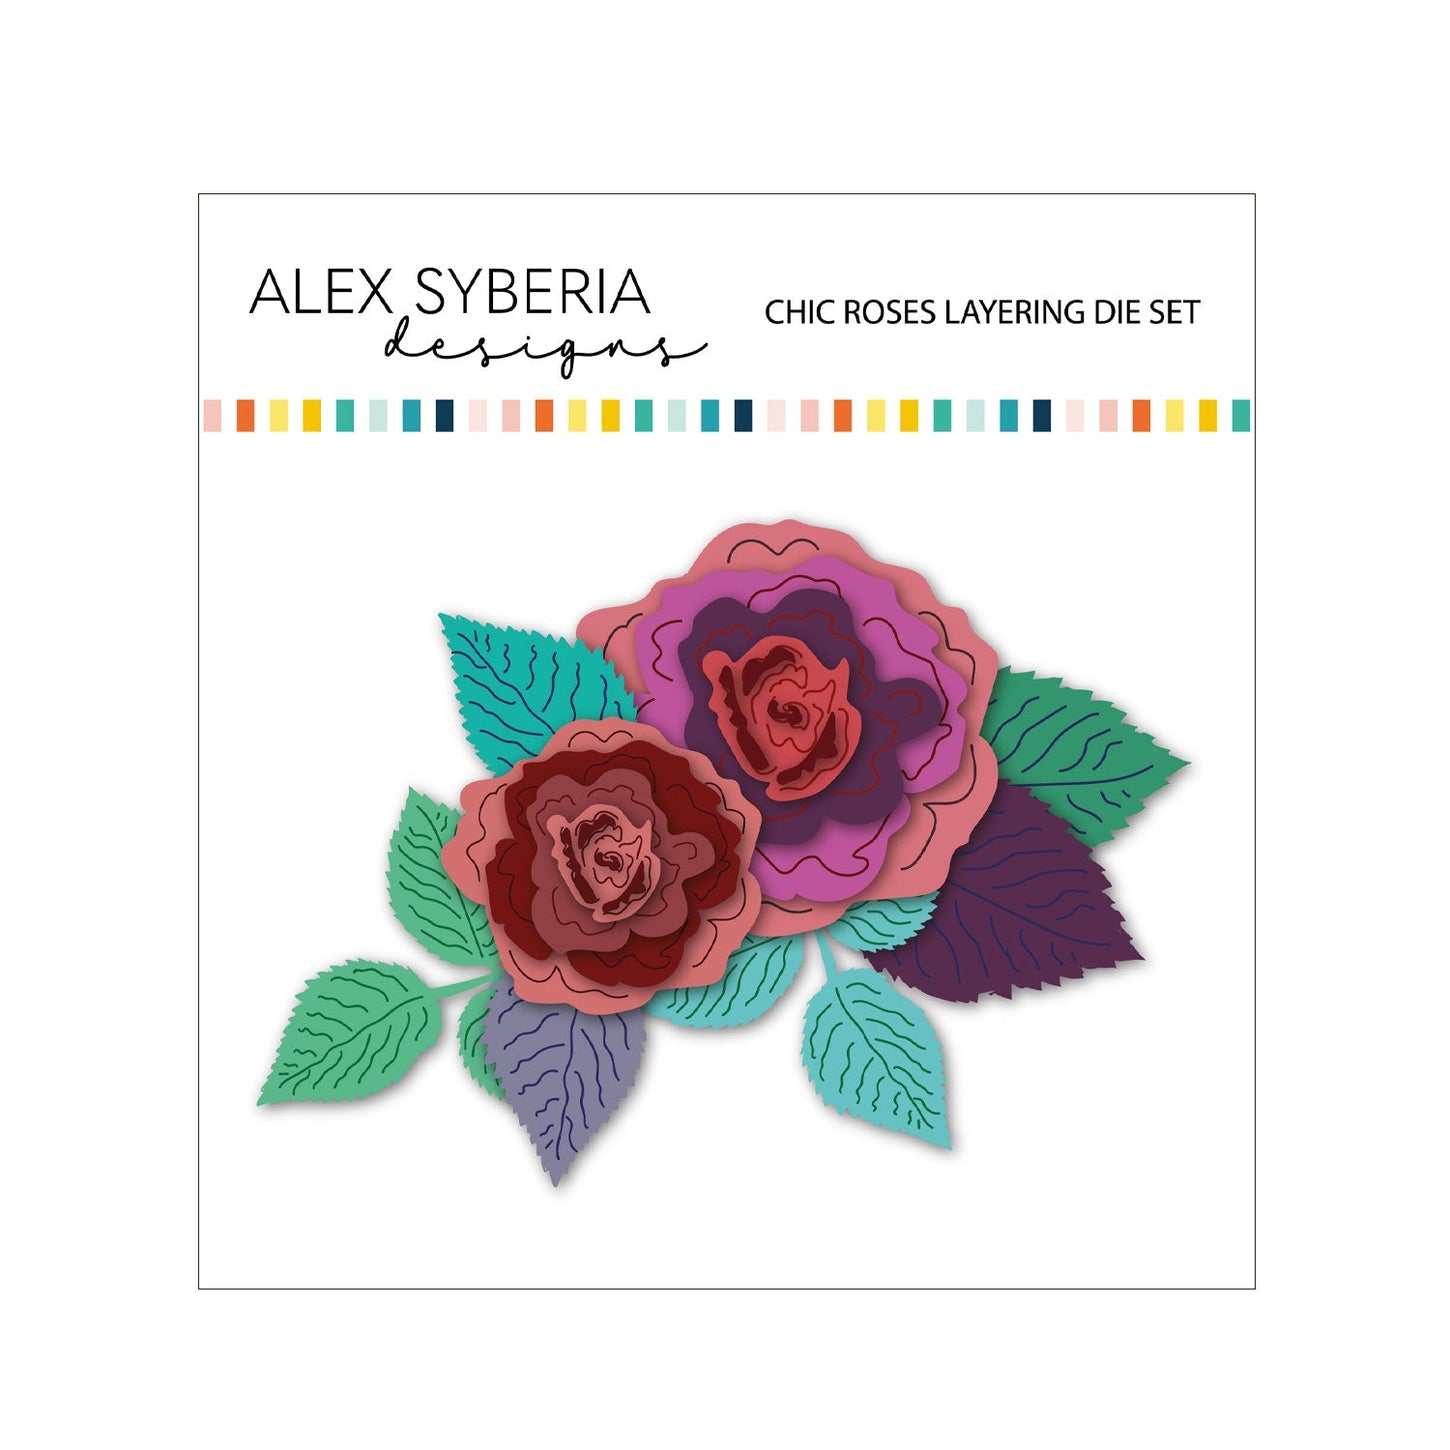 alex-syberia-designs-chic-roses-layering-die-set-cardmaking-scrapbooking-handmadecards